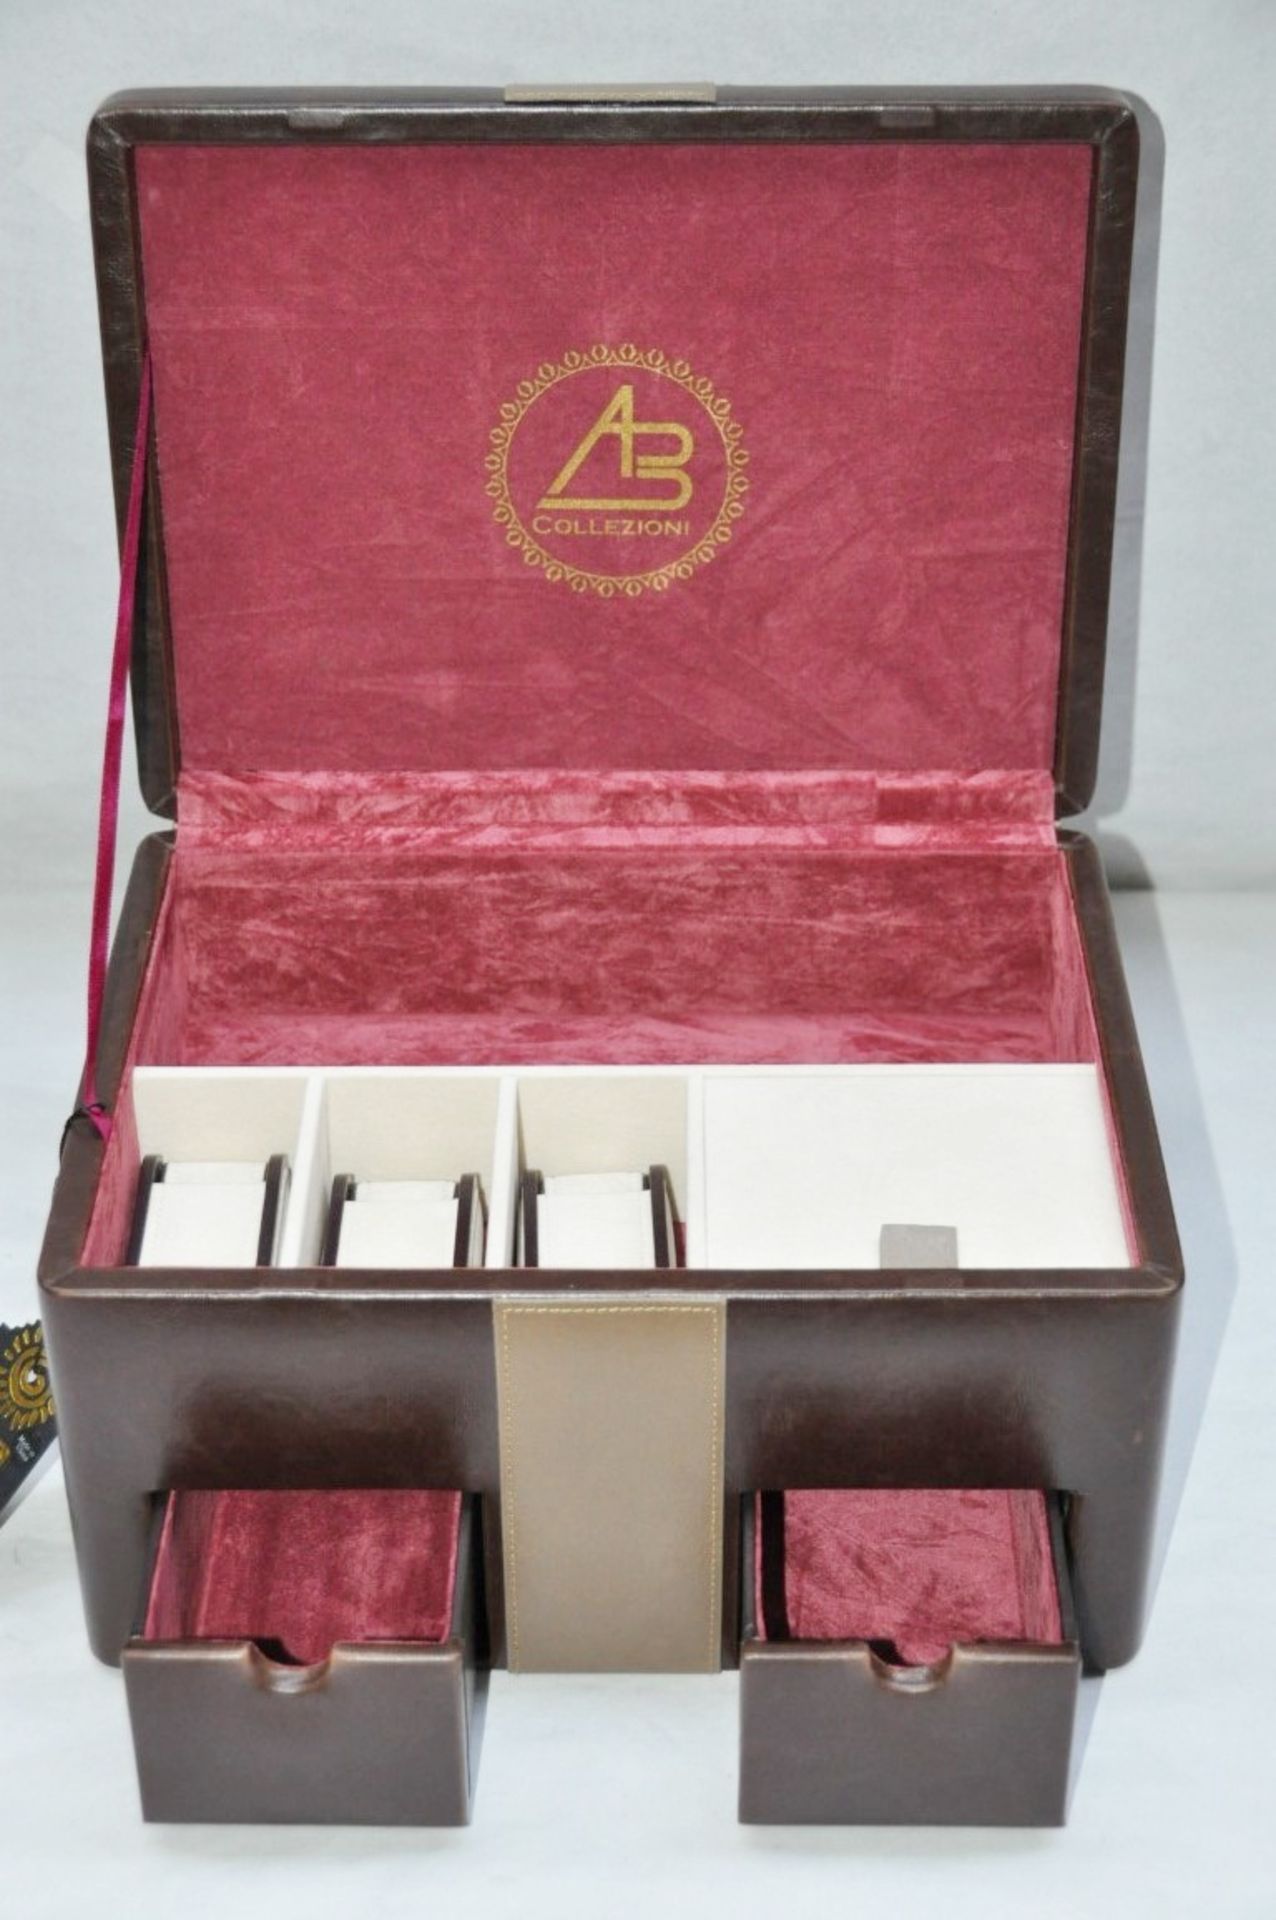 1 x "AB Collezioni" Italian Genuine Leather & Suede Luxury Jewellery Box (34044) - Ref LT000 -